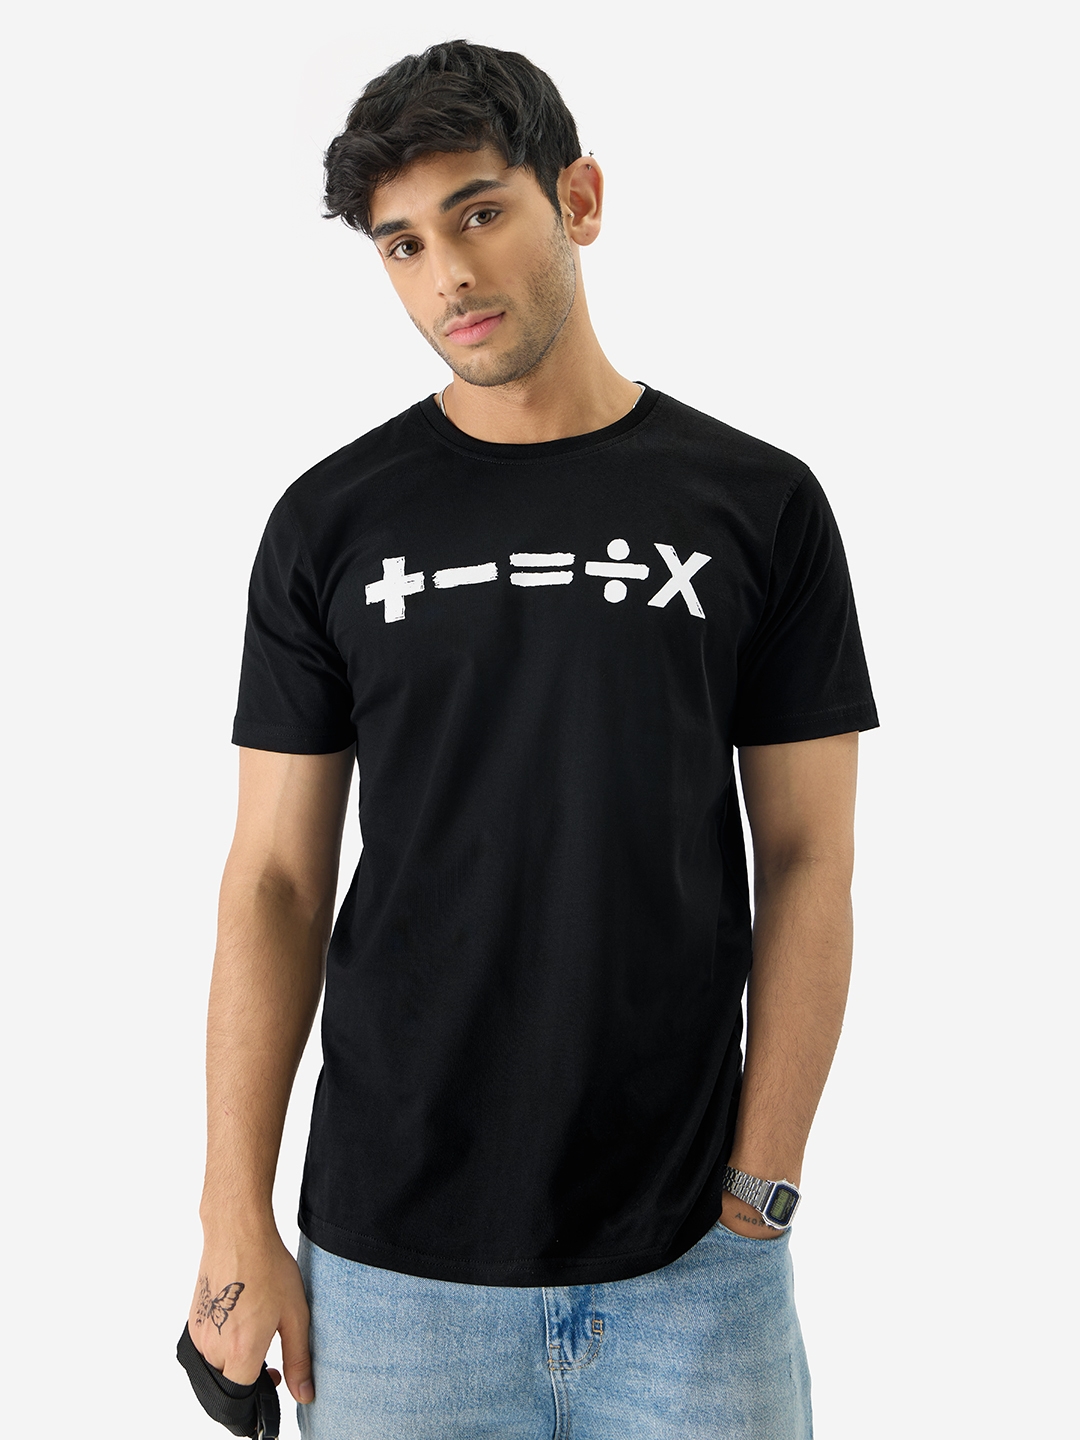 Men's Ed Sheeran: Mathematics Tour T-Shirts